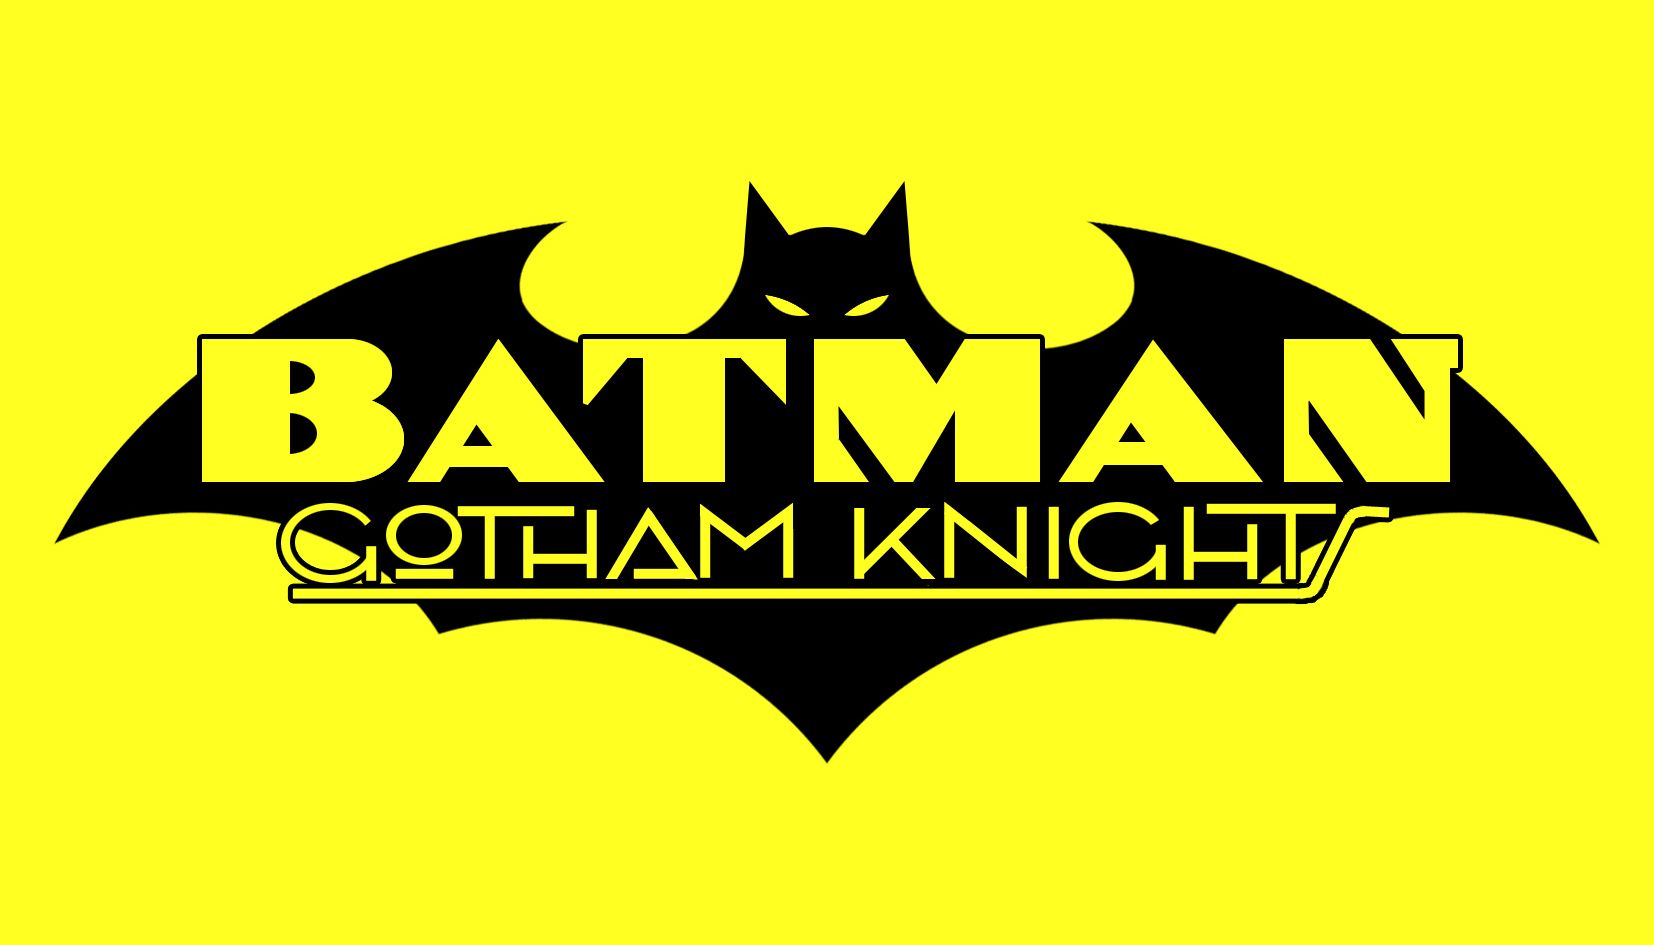 Batman: Gotham Knight Wallpaper and Background Imagex945